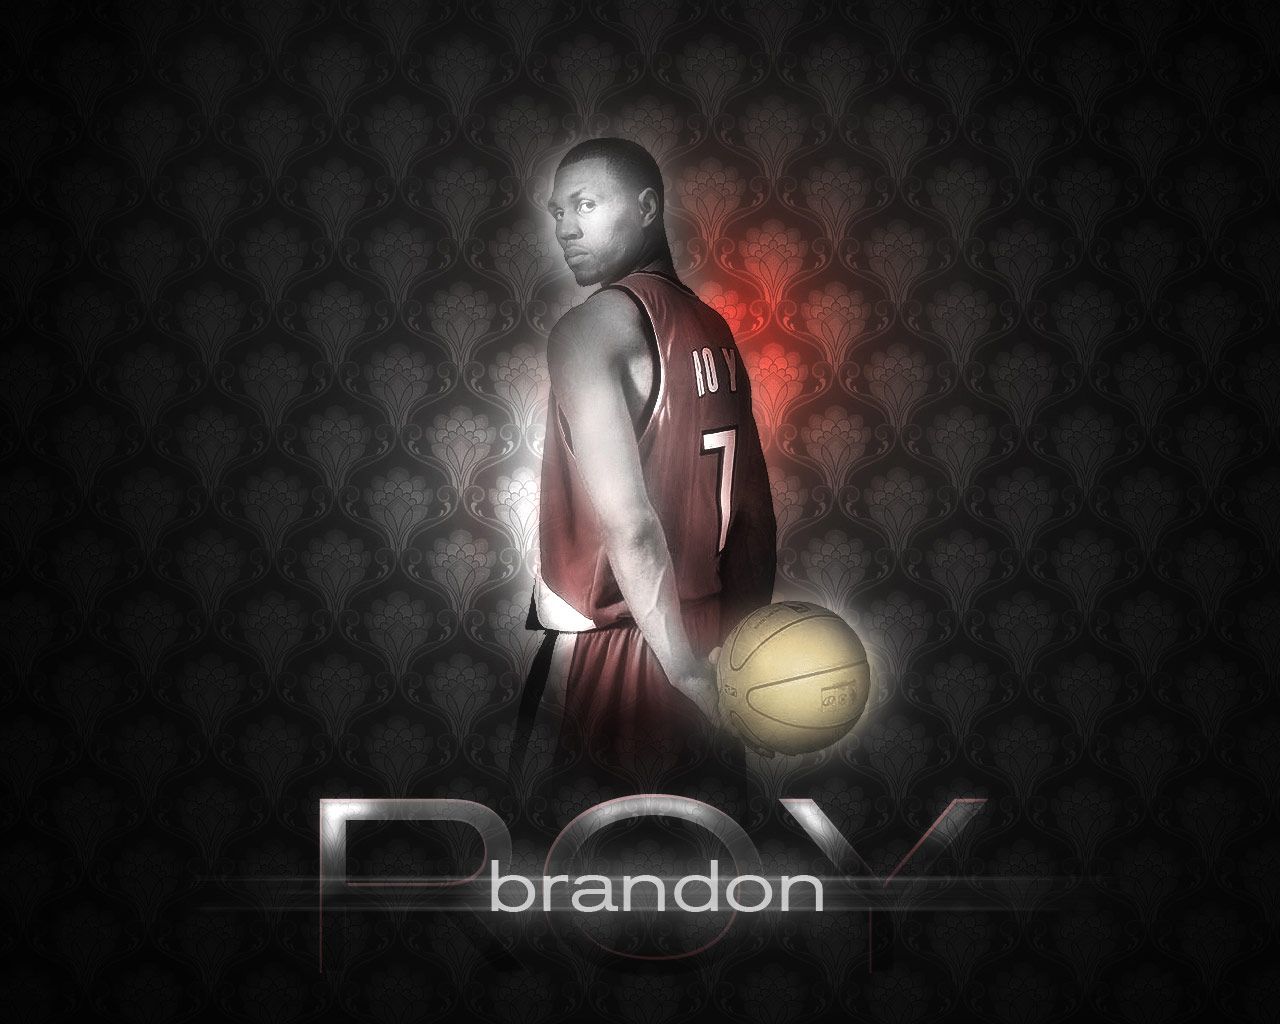 Brandon Roy Wallpaper | Basketball Wallpapers at BasketWallpapers.com